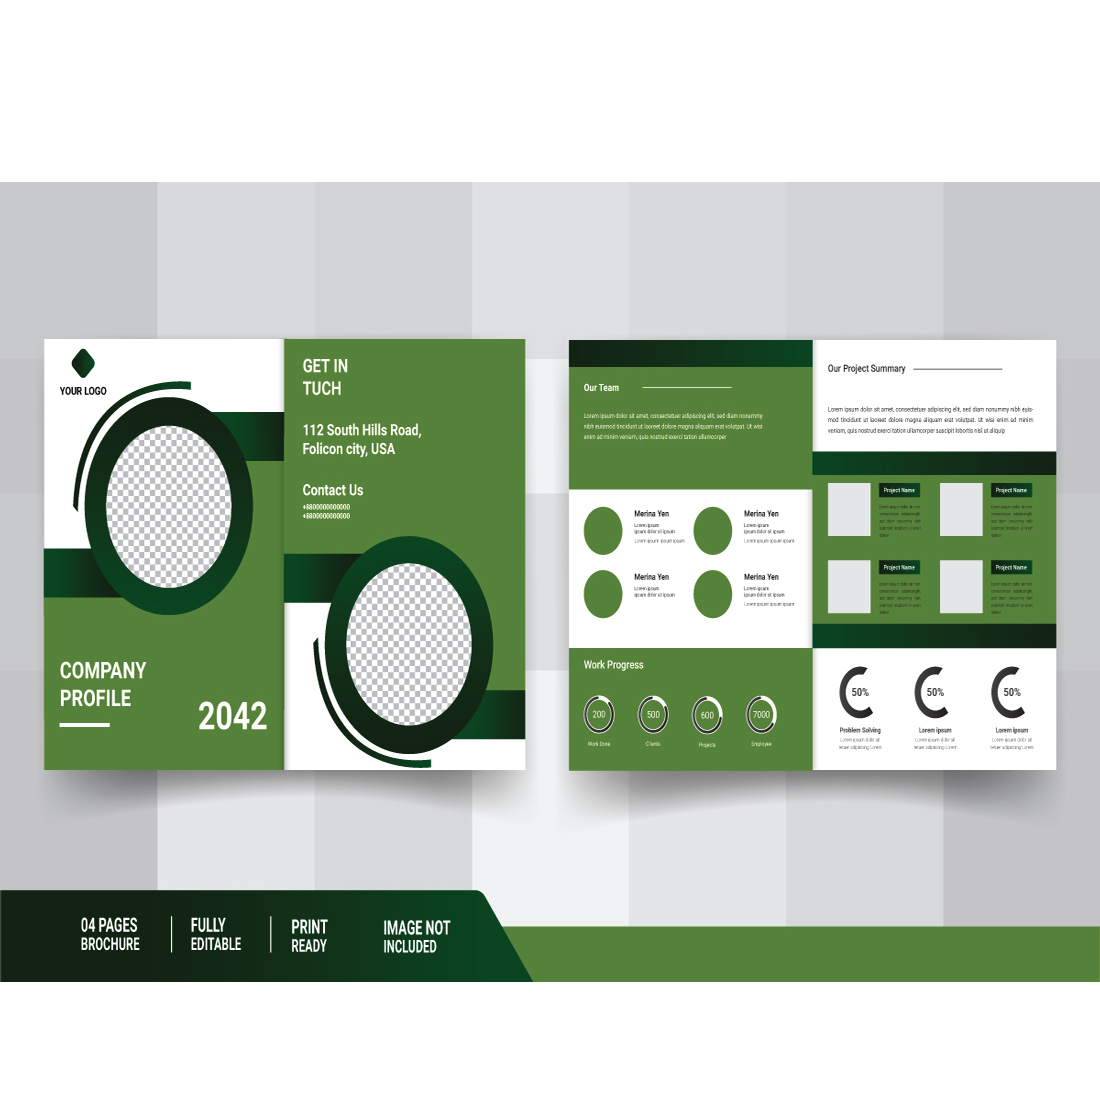 Bifold company brochure template design cover image.